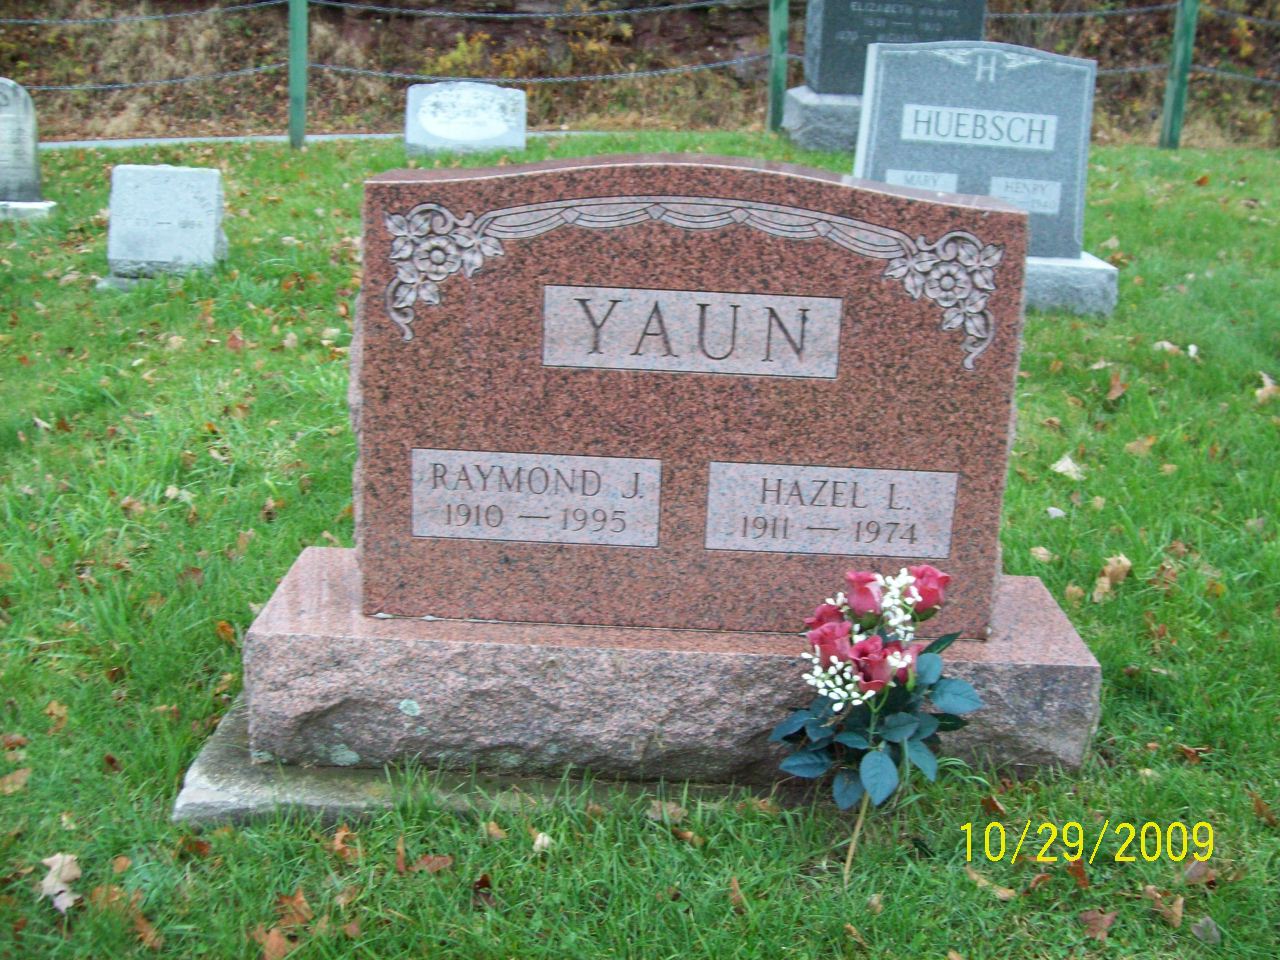 Raymond and Hazel Yaun